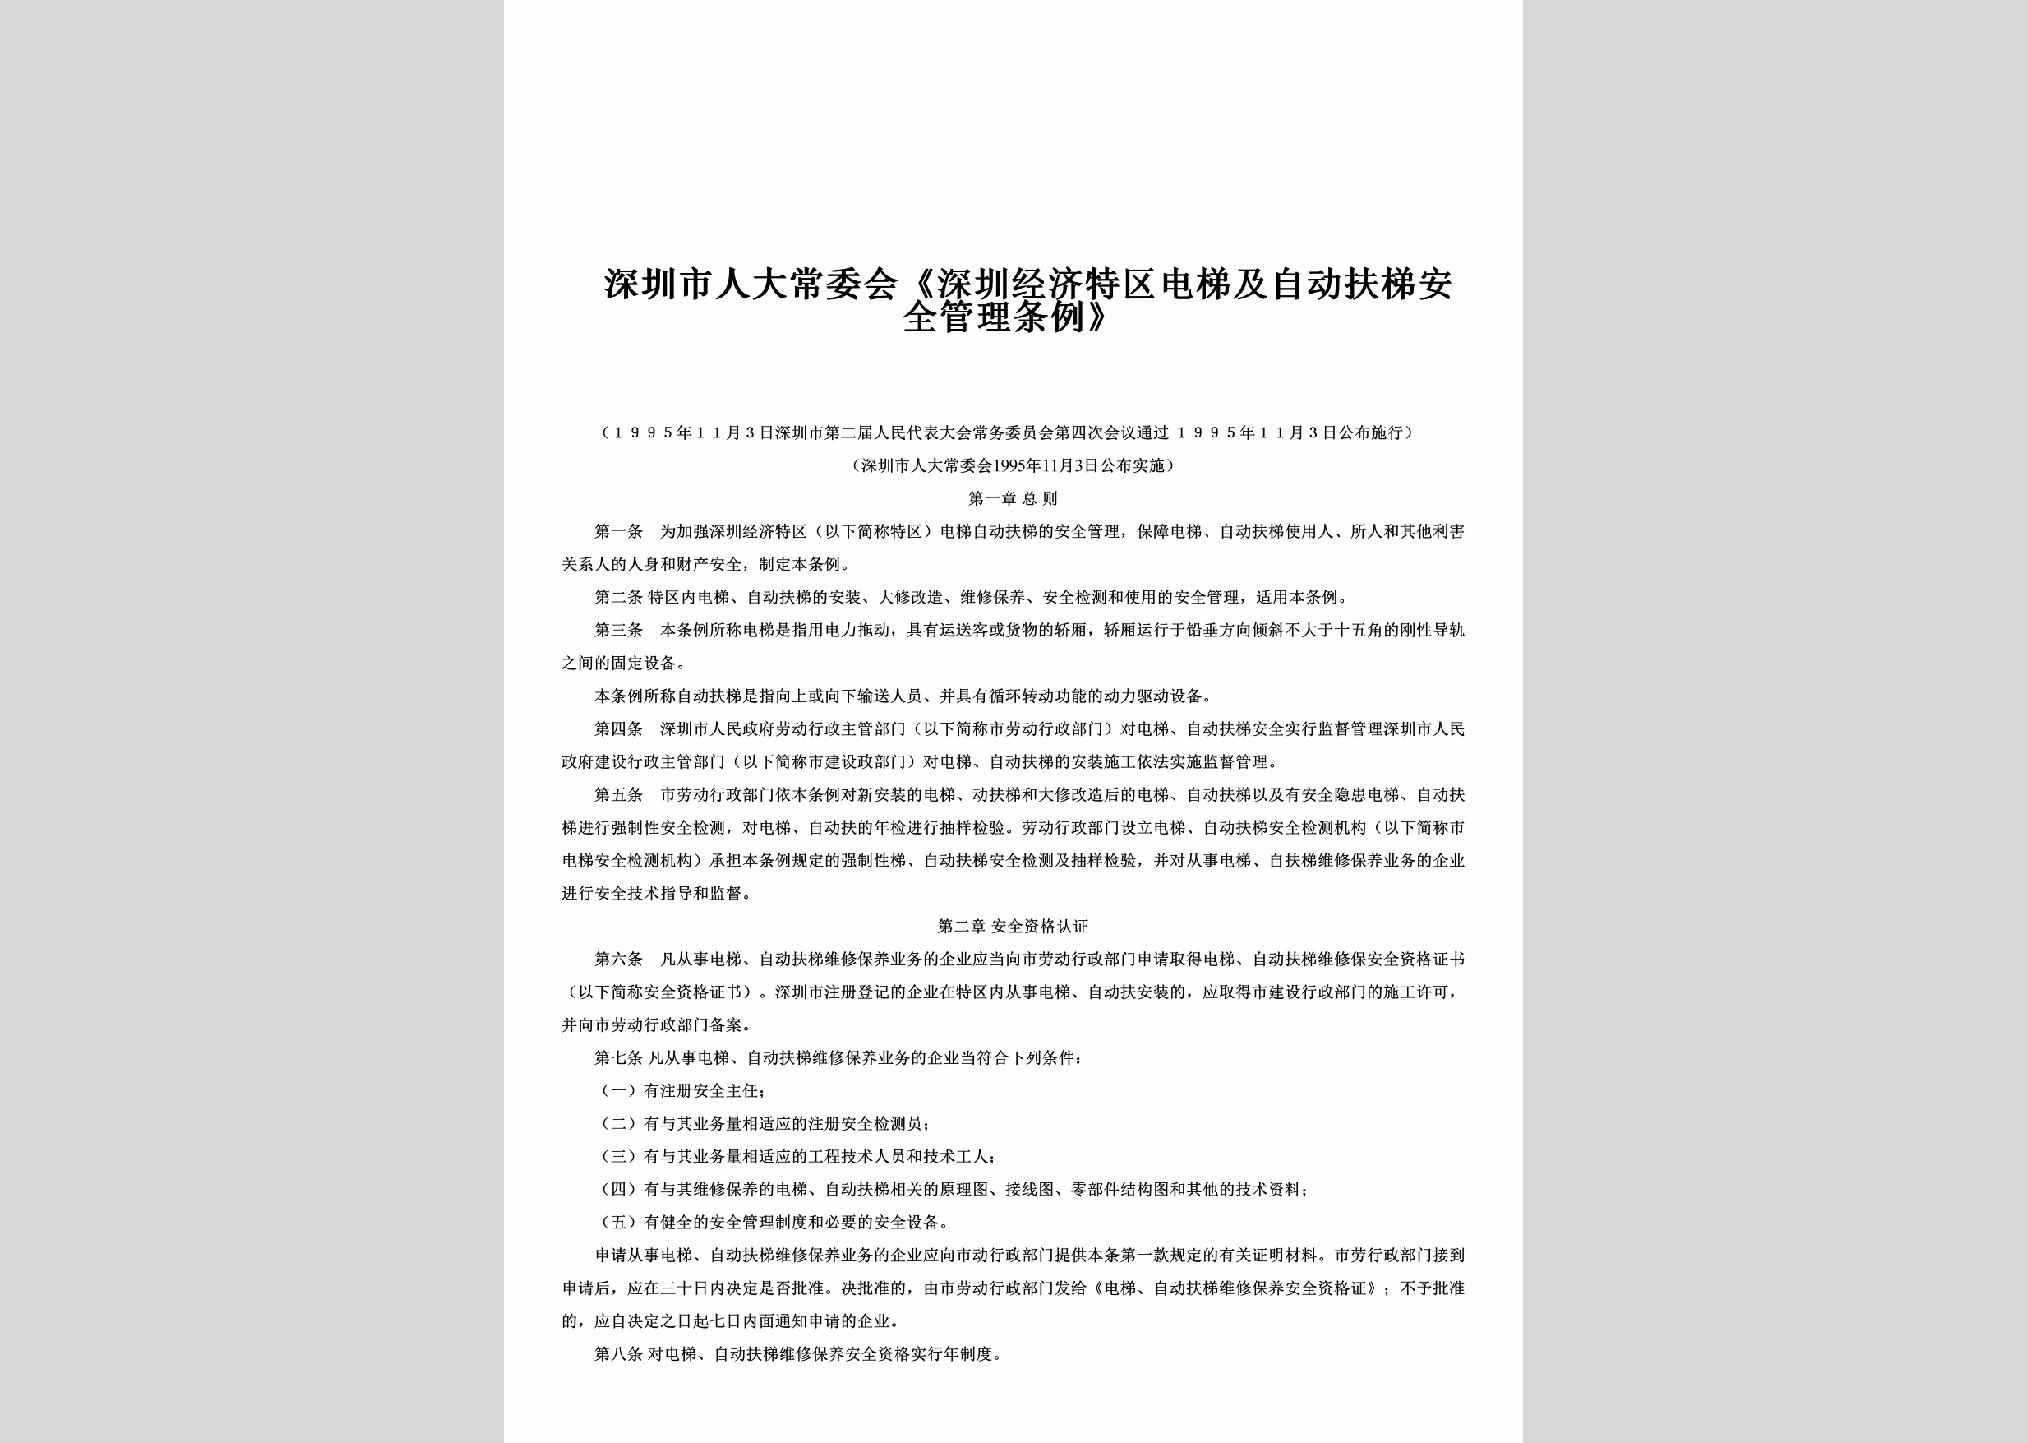 GD-ZIFTAQTL-1995：《深圳经济特区电梯及自动扶梯安全管理条例》